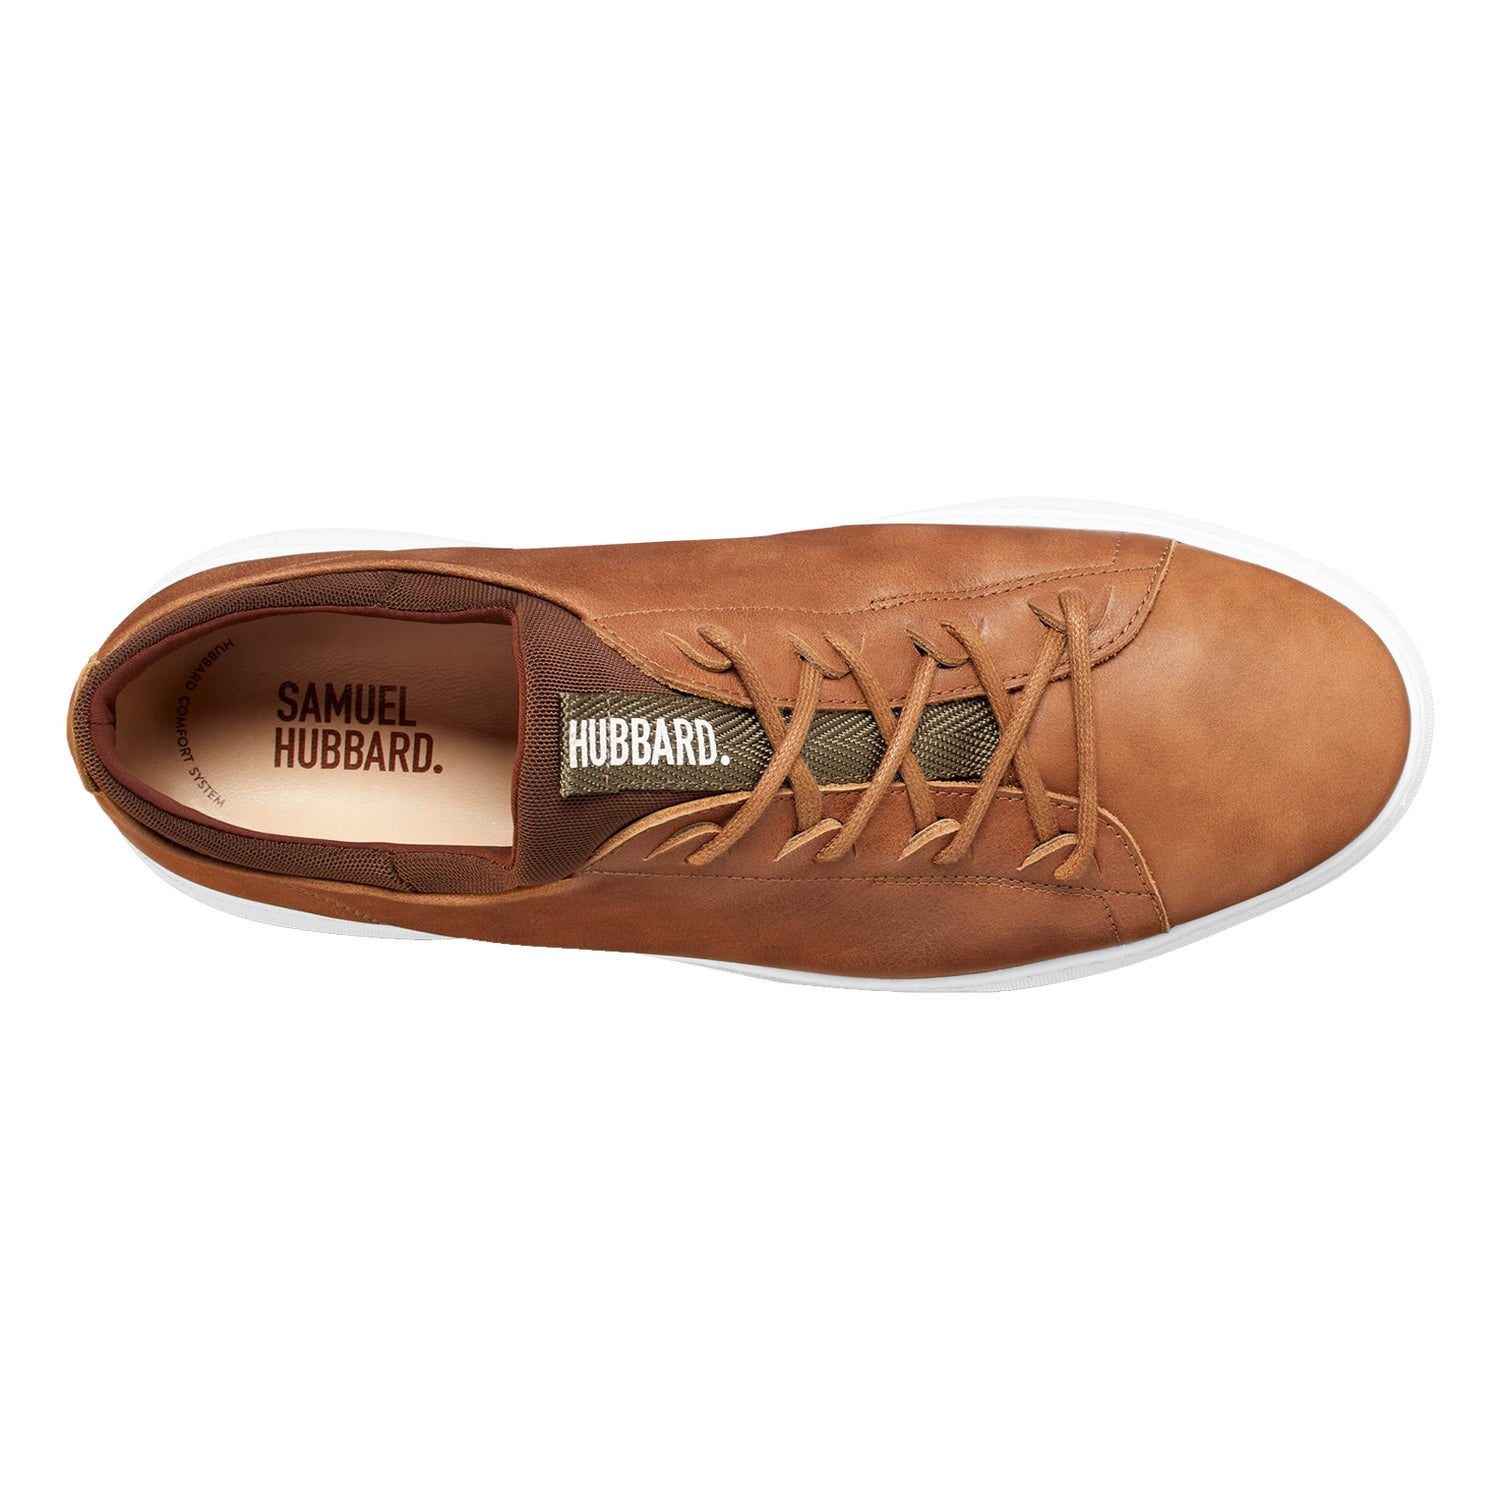 Peltz Shoes  Men's Samuel Hubbard Hubbard Free Sneaker Tan M1600-002